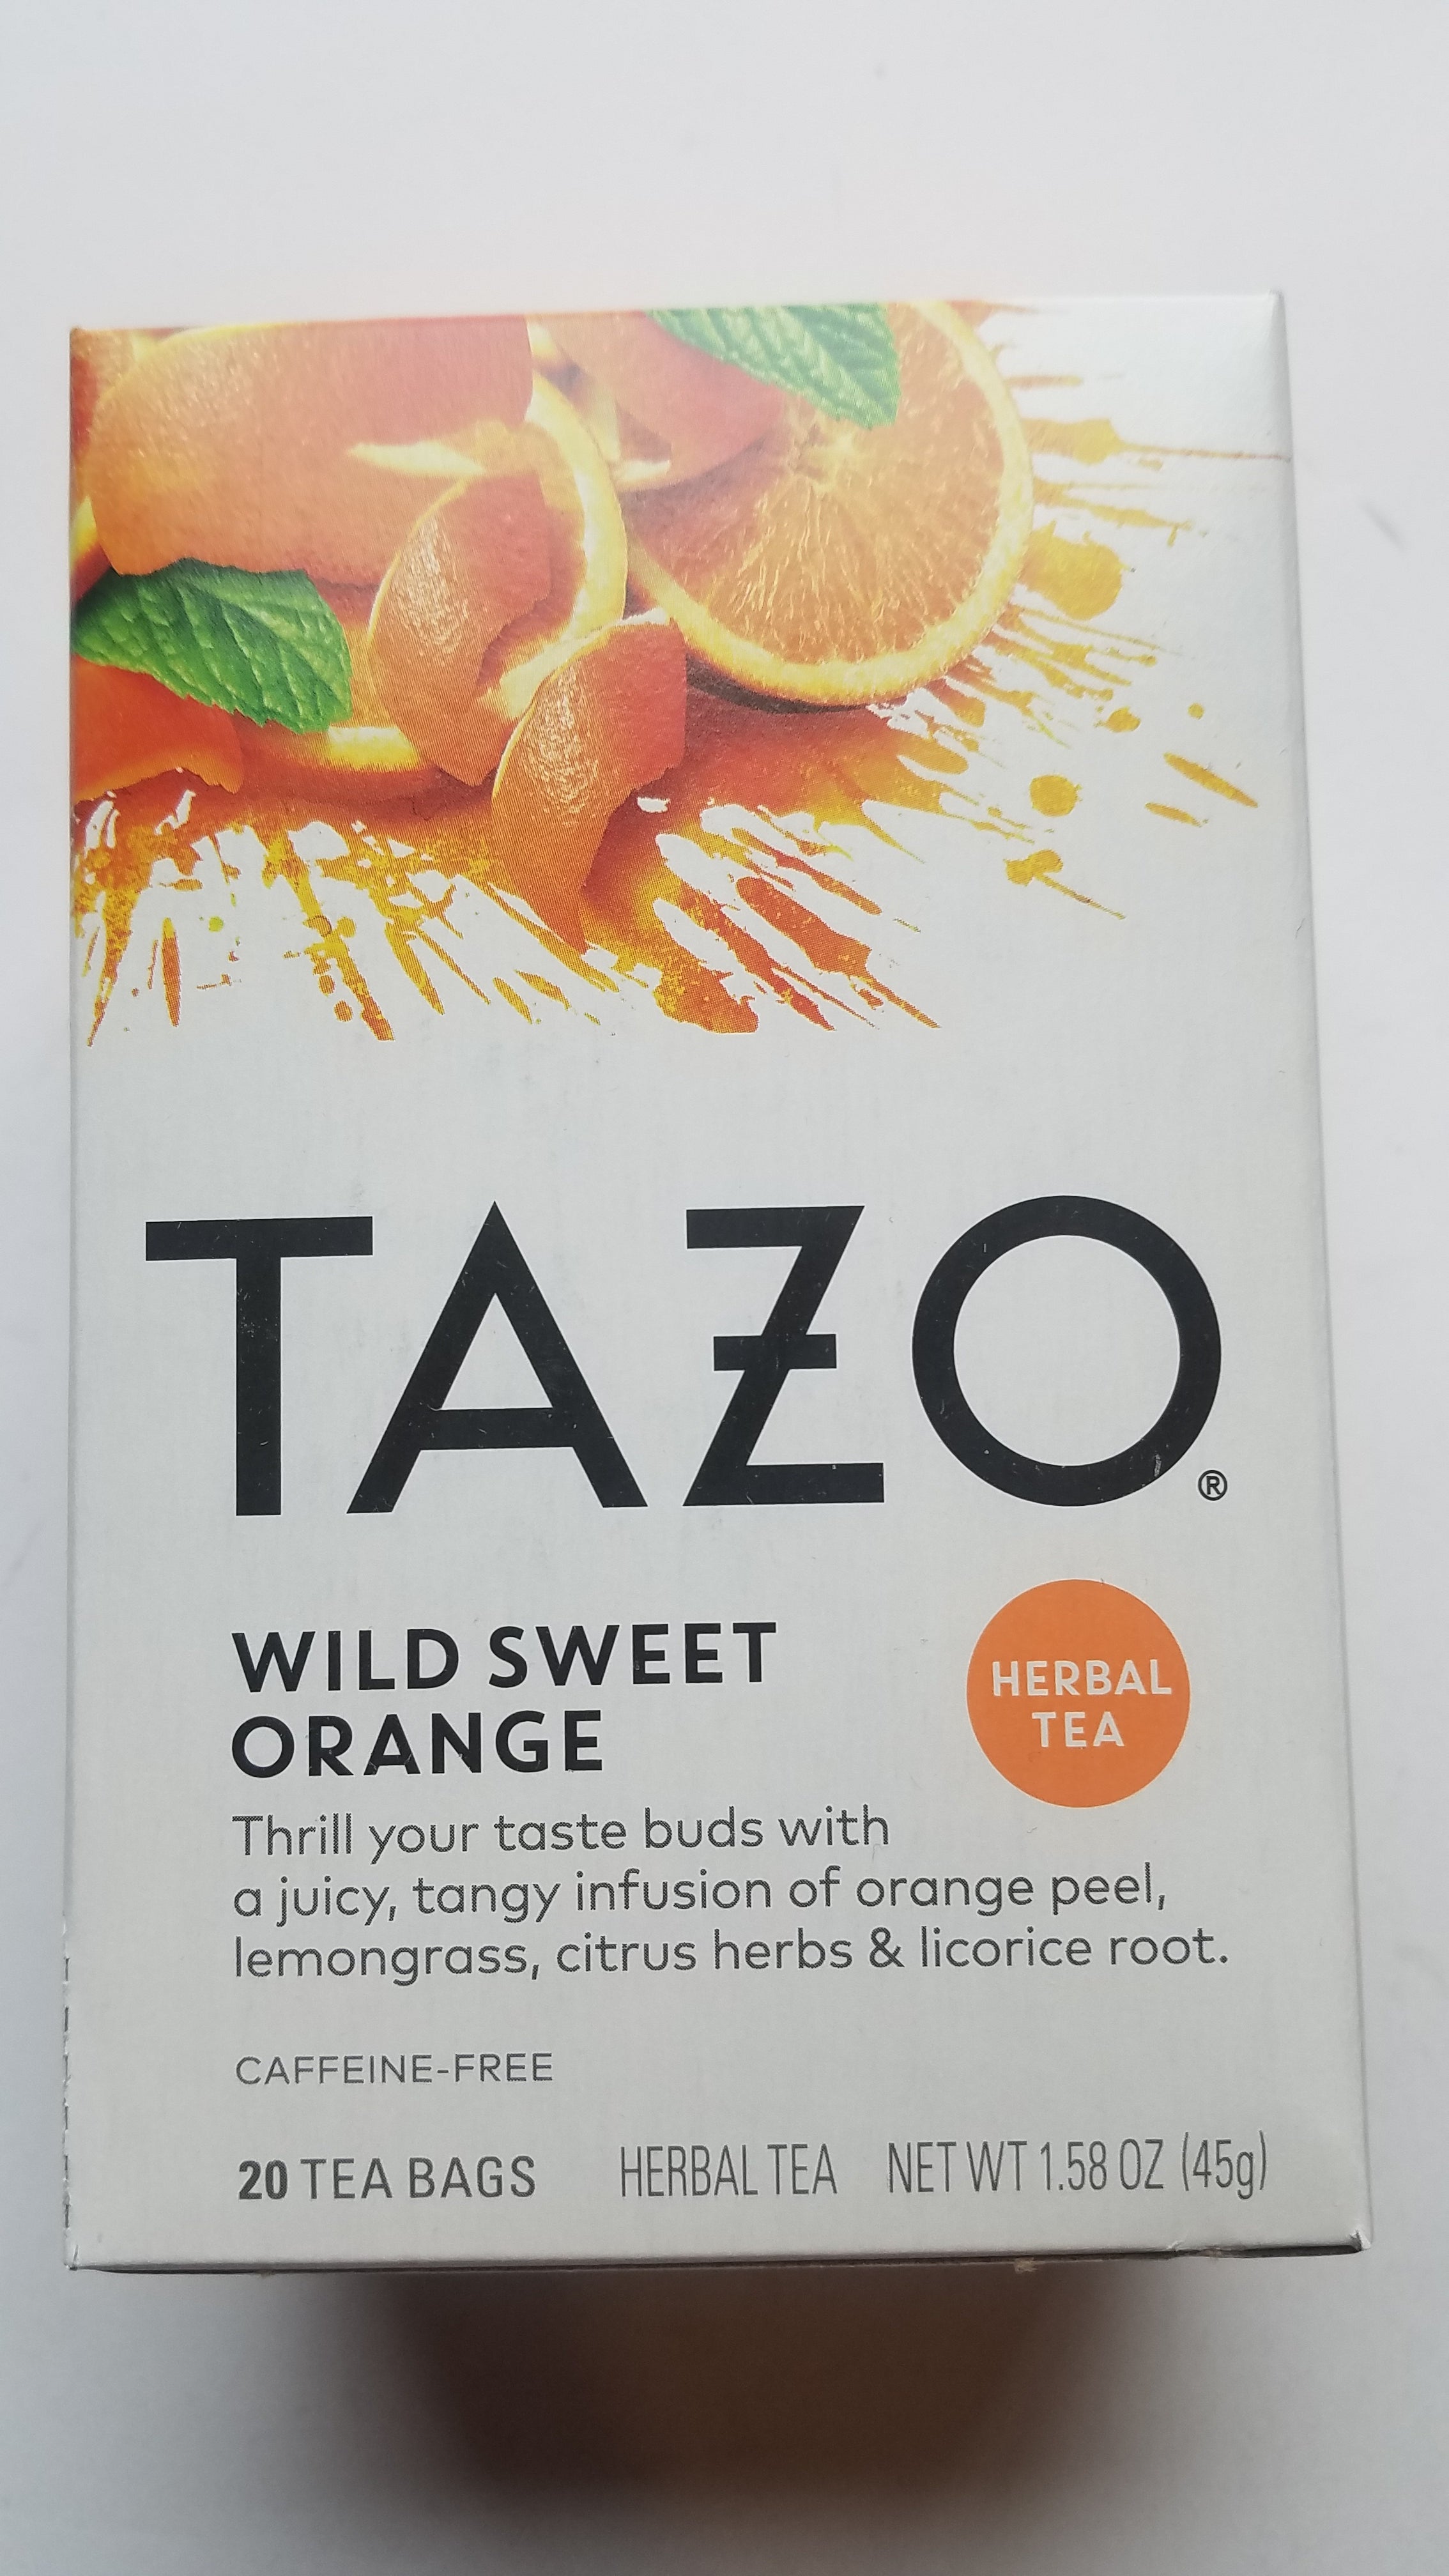 Tazo wild sweet orange herbal tea 20 count box filterbags lot of 2 new